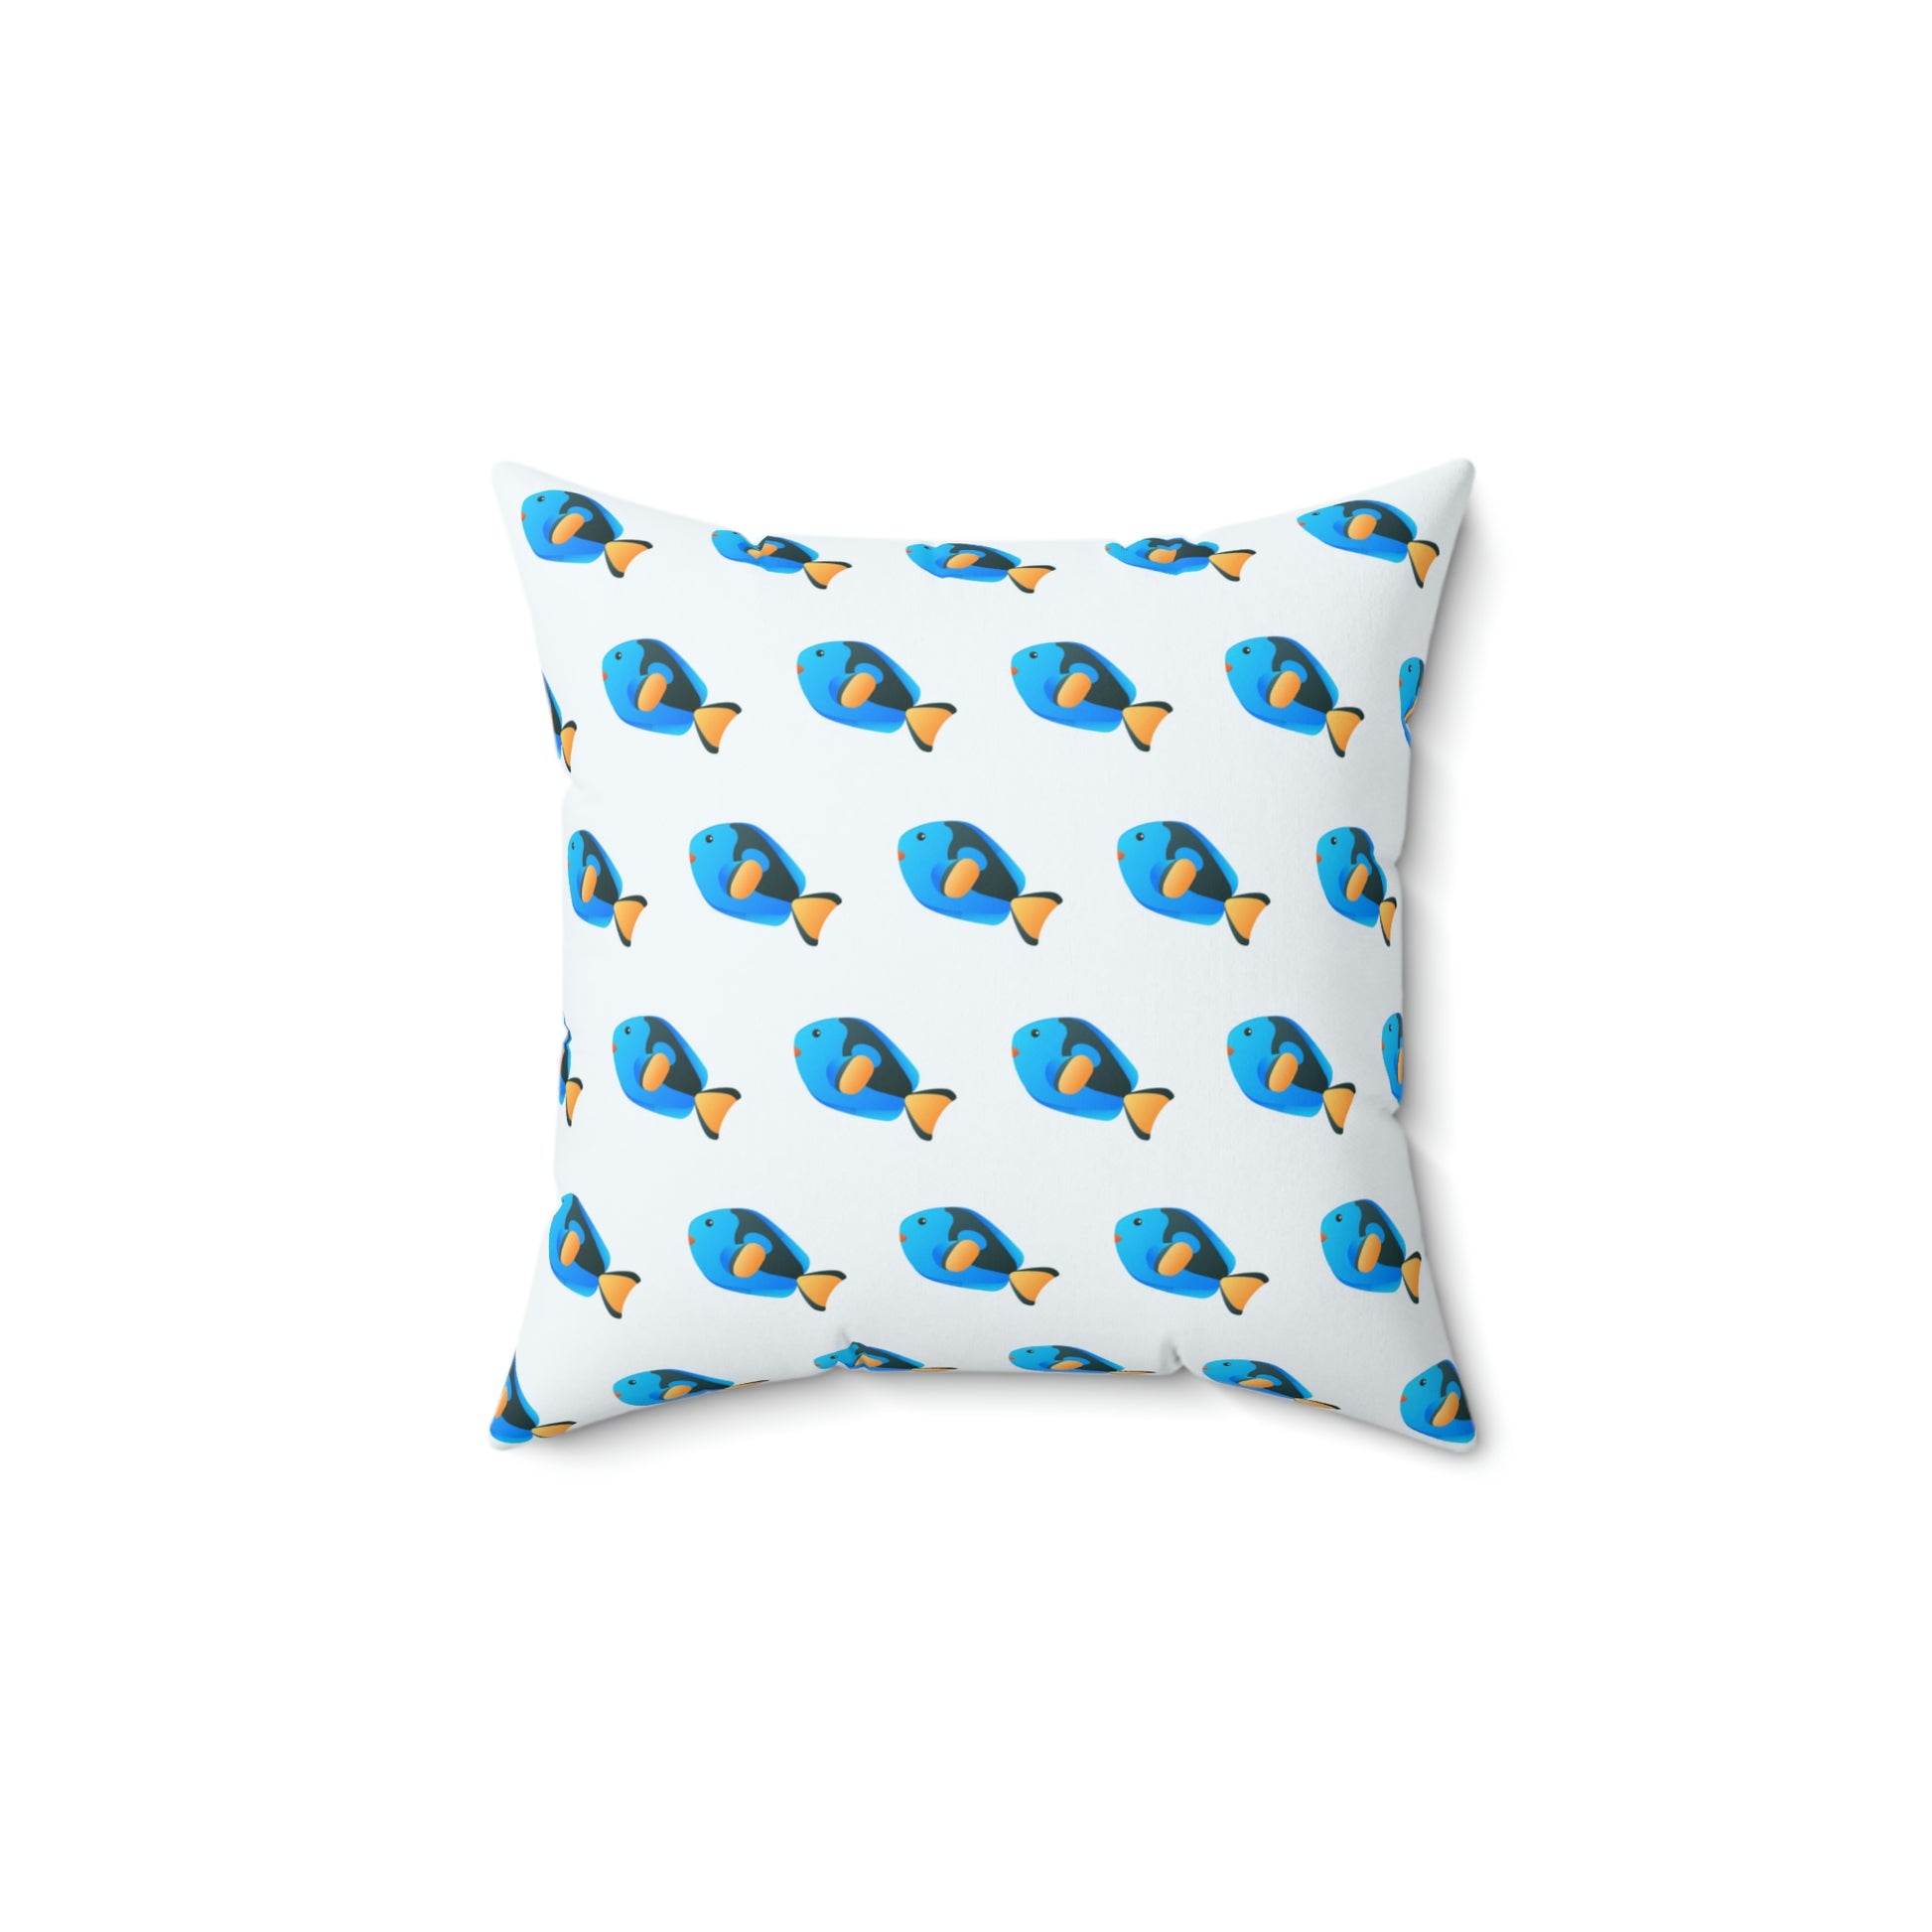 Blue Tang Pattern Pillow - Reef of Clowns